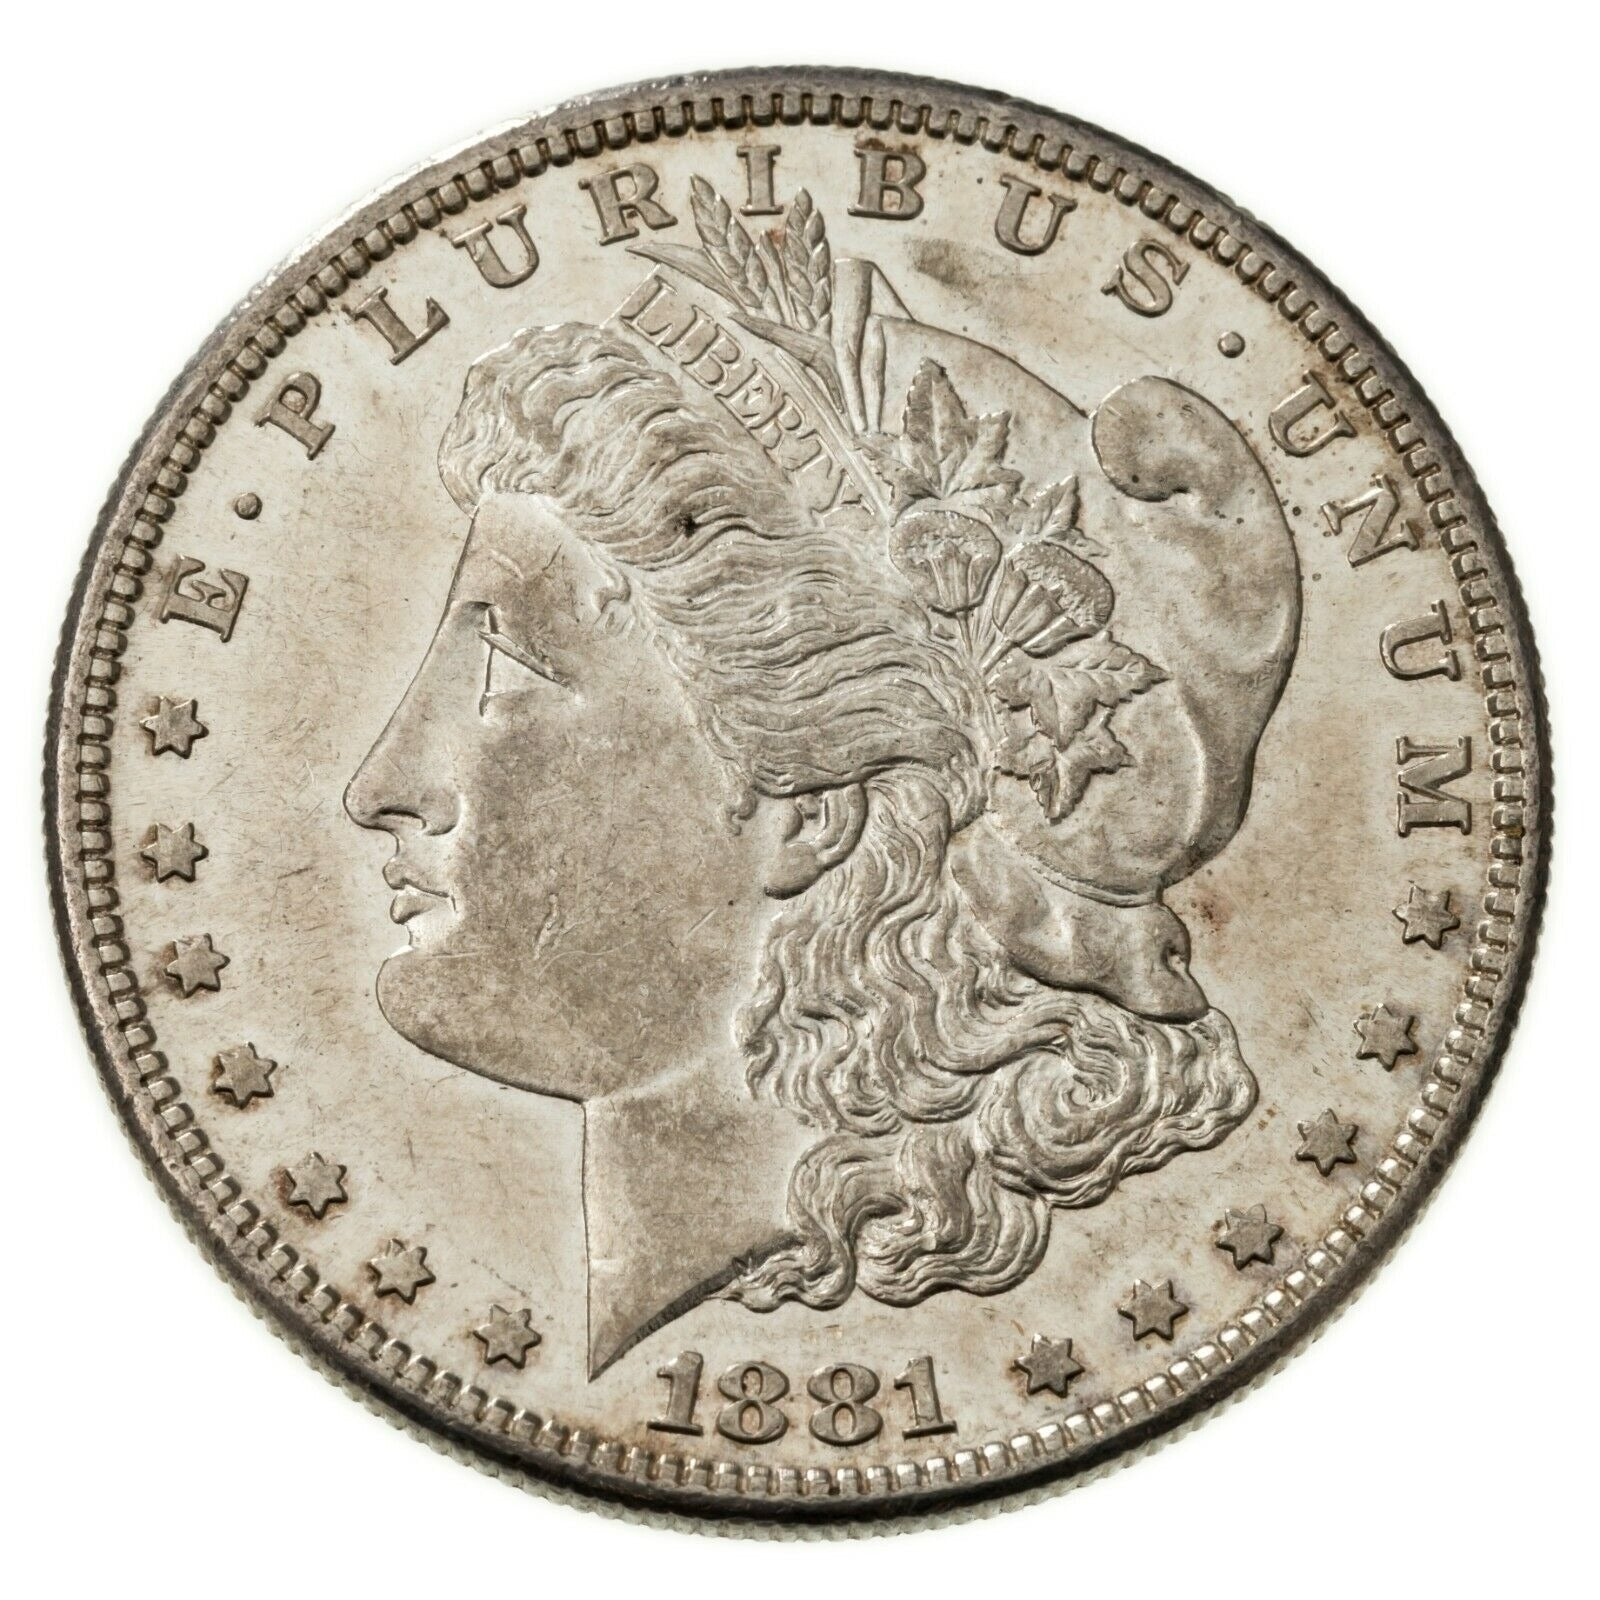 The Prooflike Morgan Silver Dollar